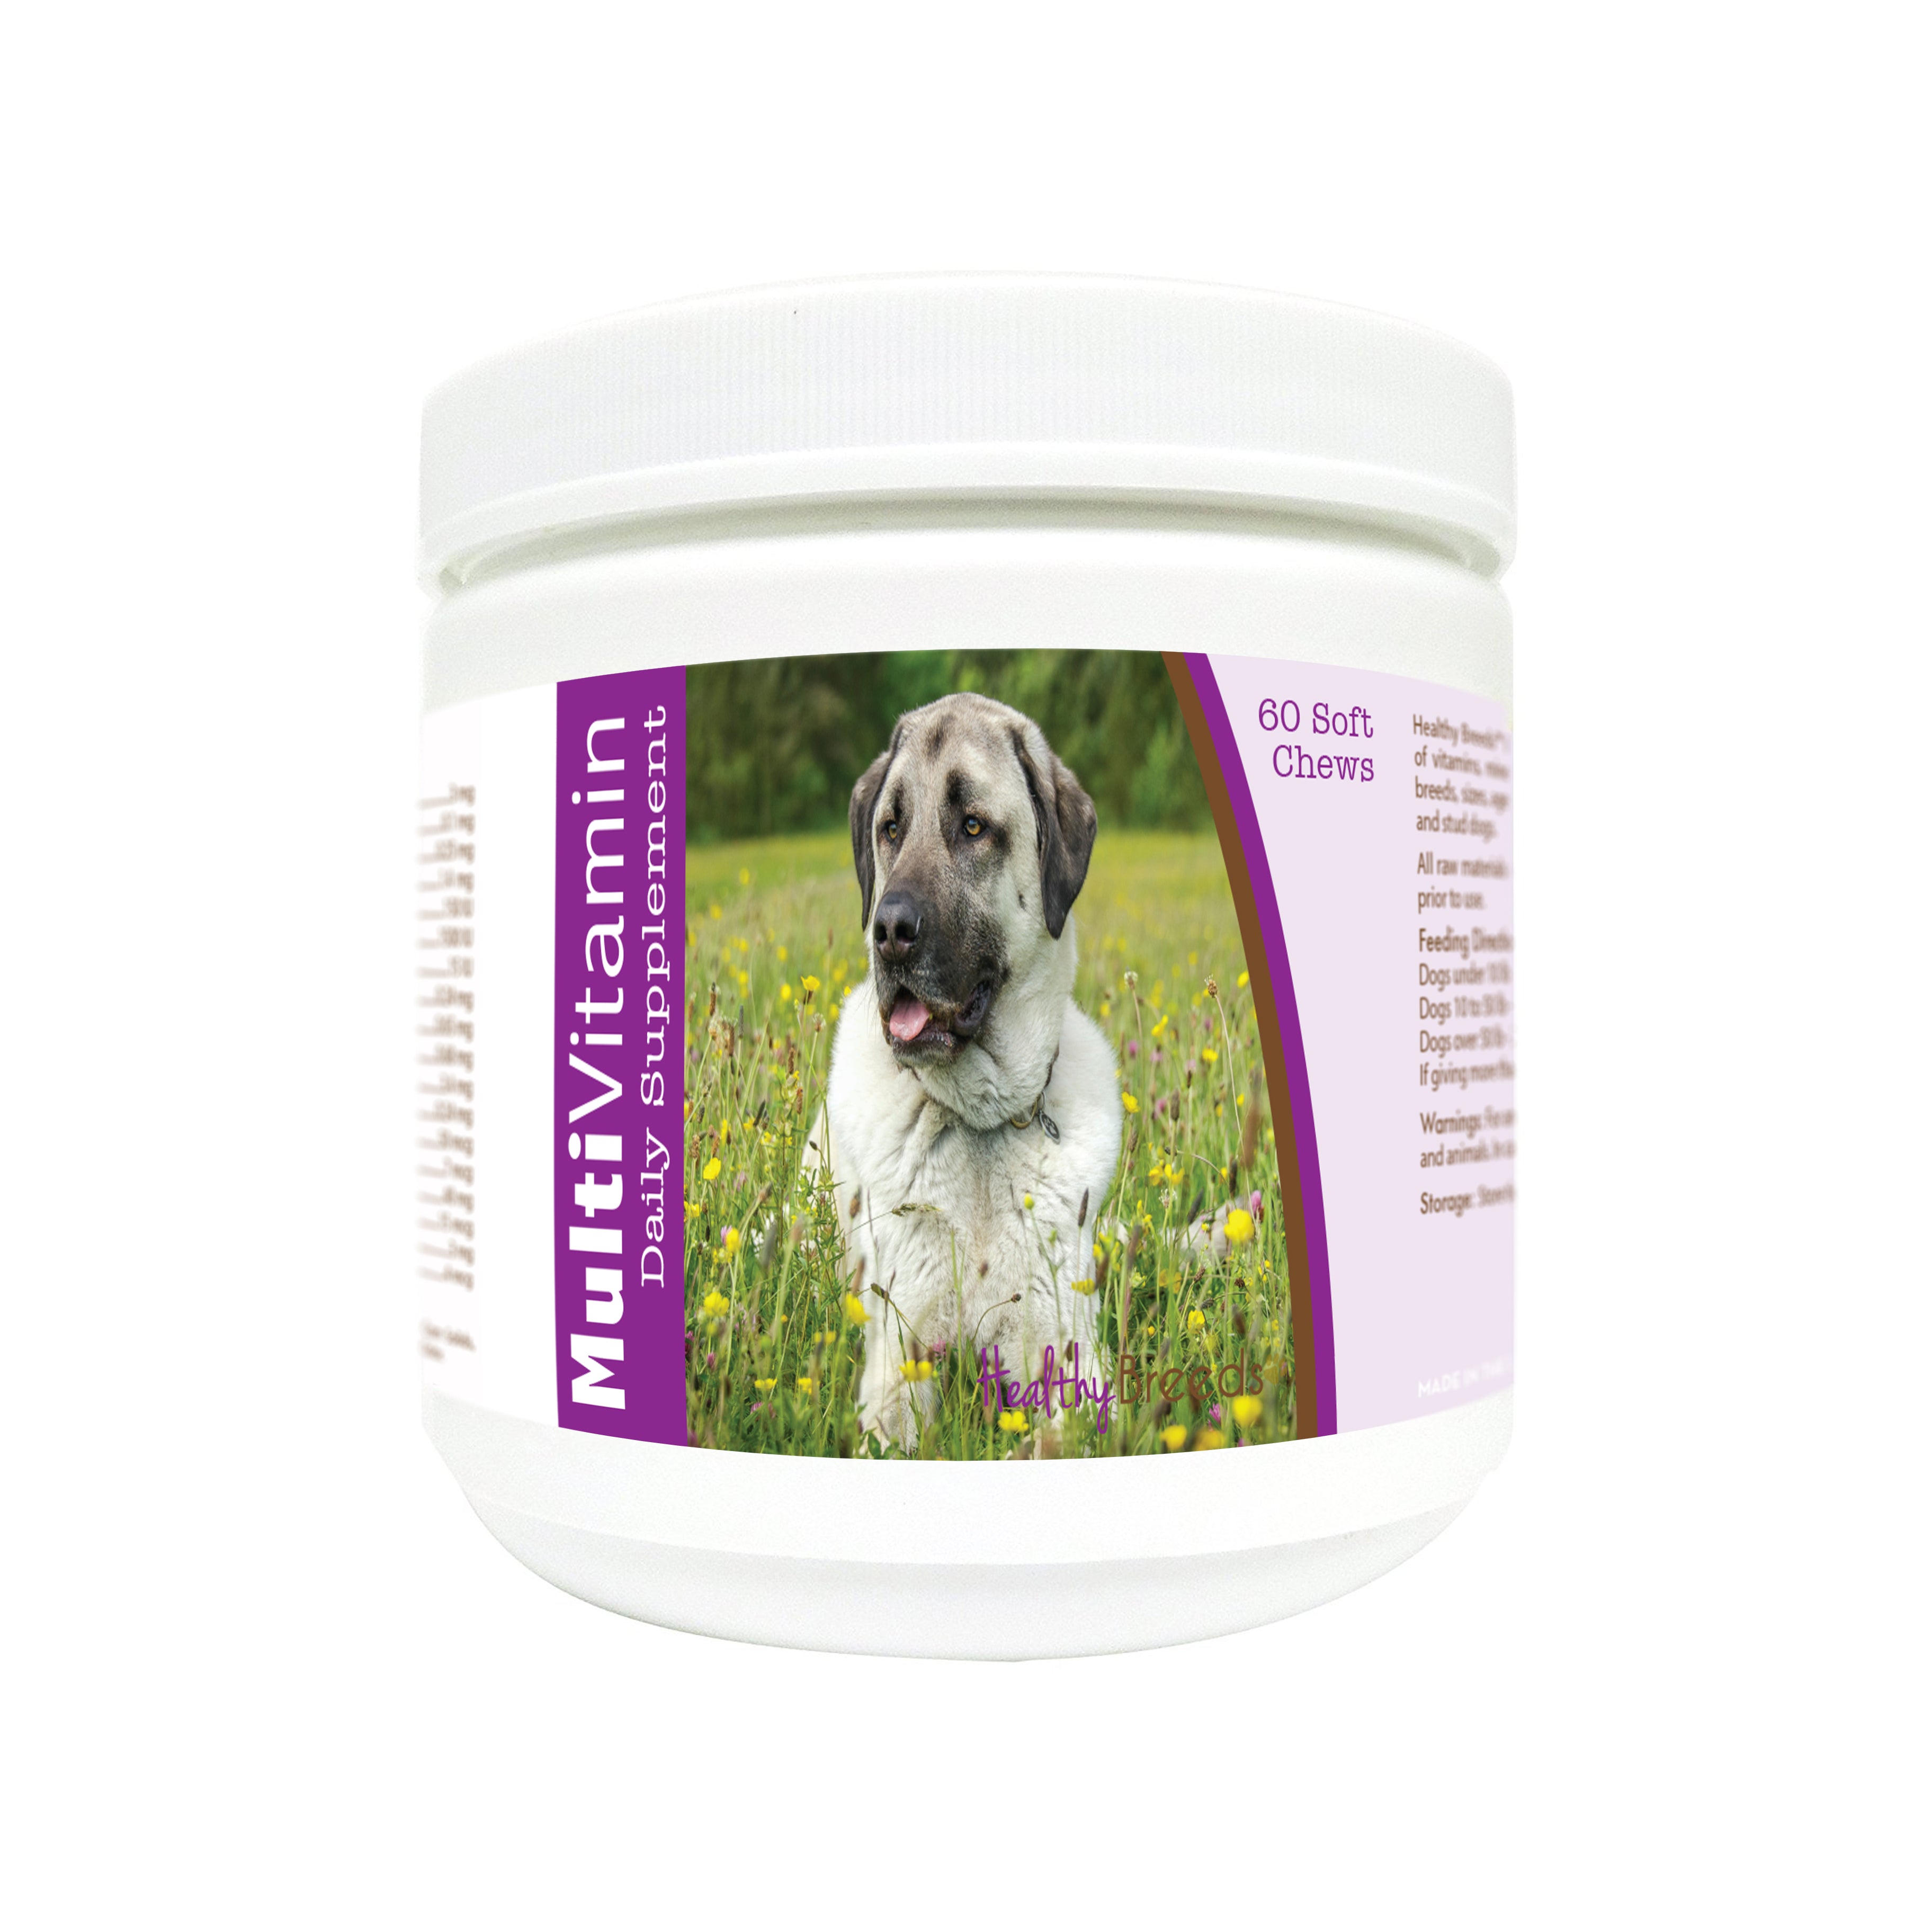 Anatolian Shepherd Dog Multi-Vitamin Soft Chews 60 Count